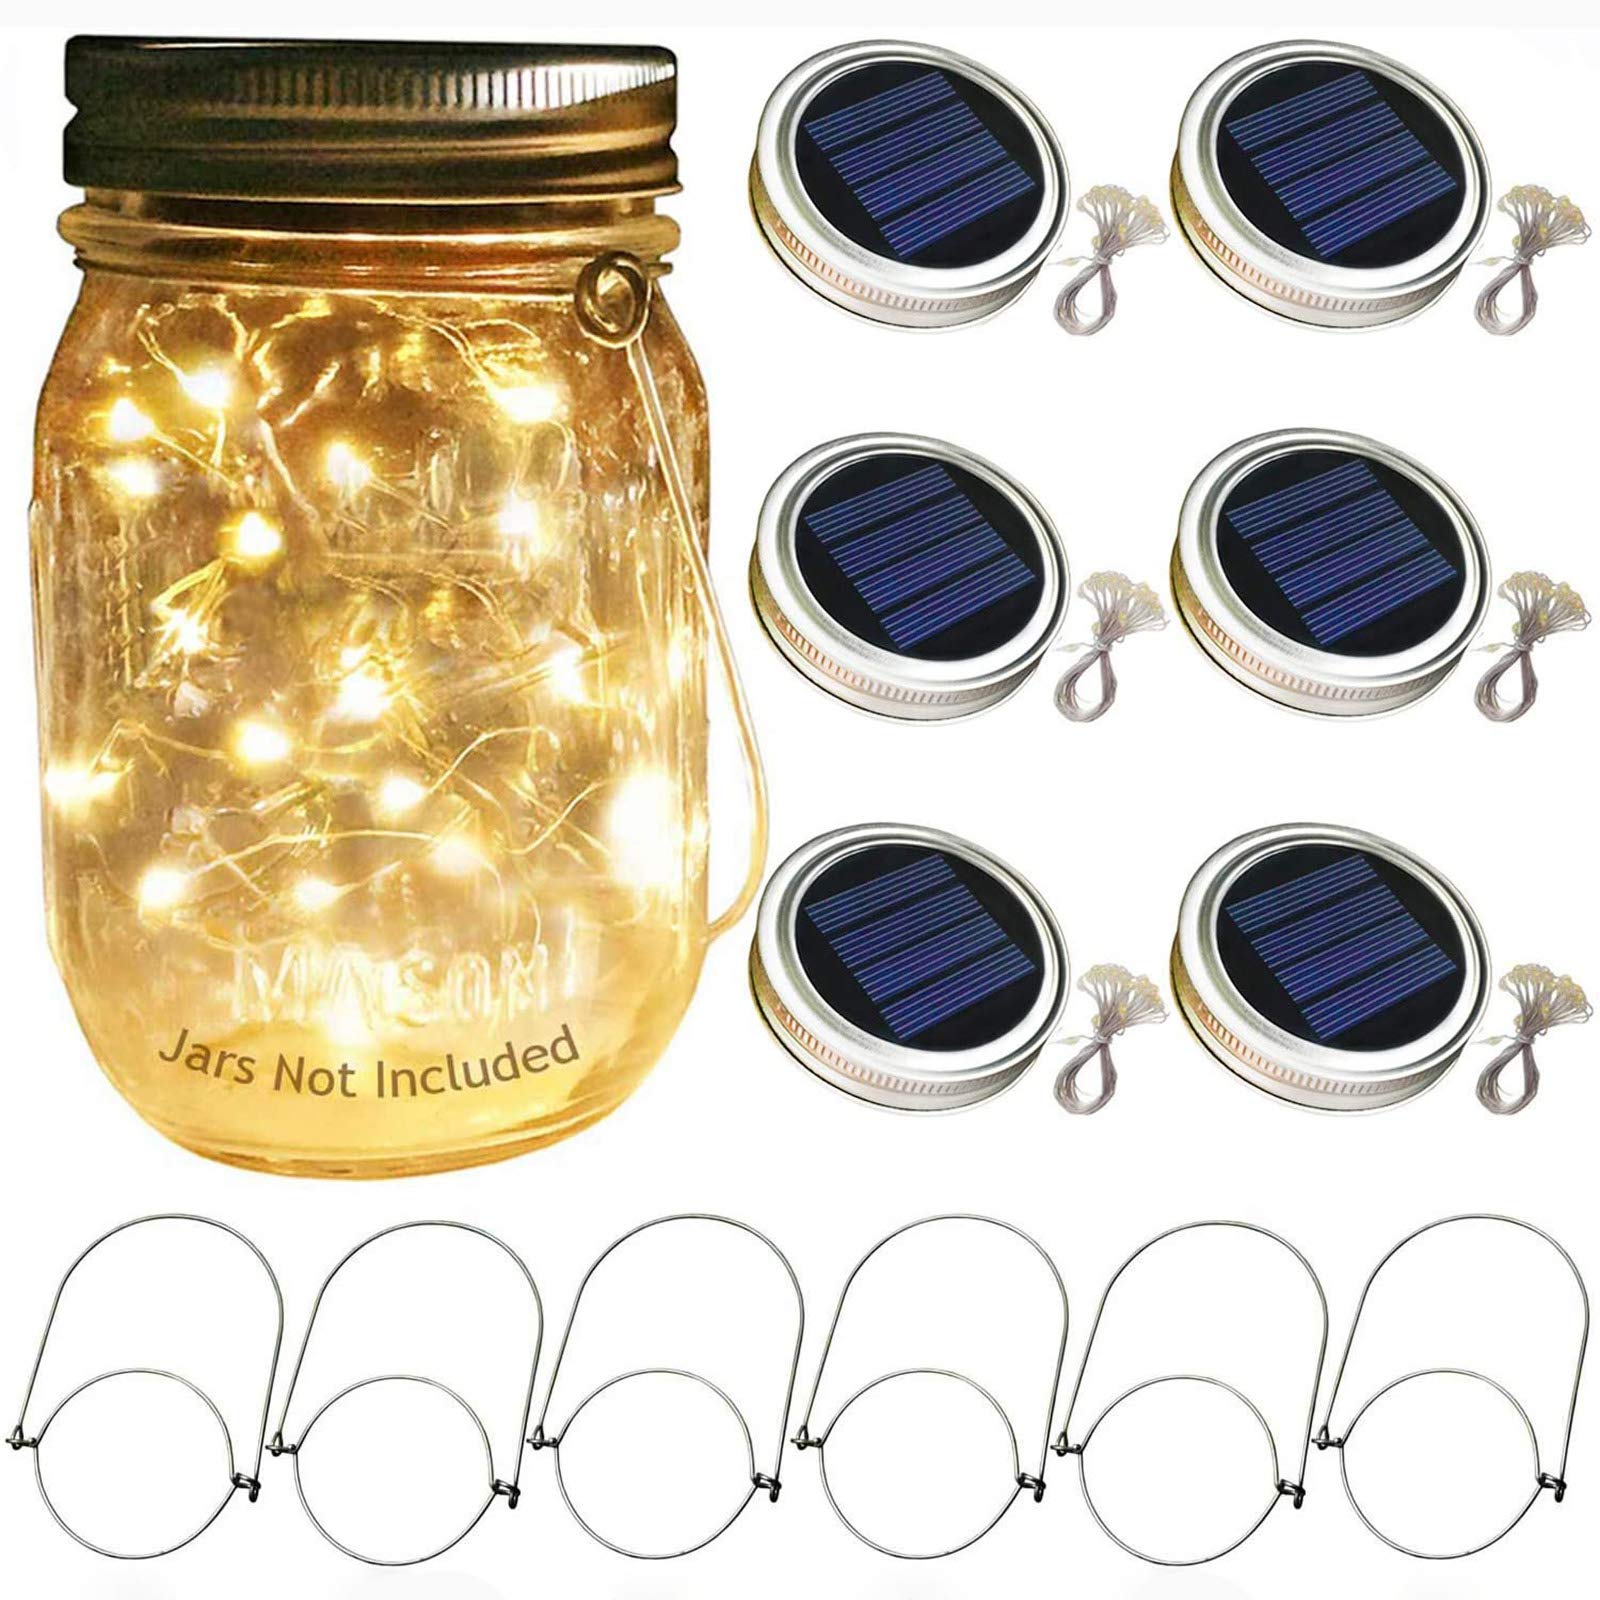 Solar Mason Jar Lid Lights - 6 Pack 20 LEDs Fairy Star Firefly Jar Lids Lights,Jars Not Included, Best for Mason Jar Decor,Great Outdoor Decor for Patio Garden Yard,Warm White